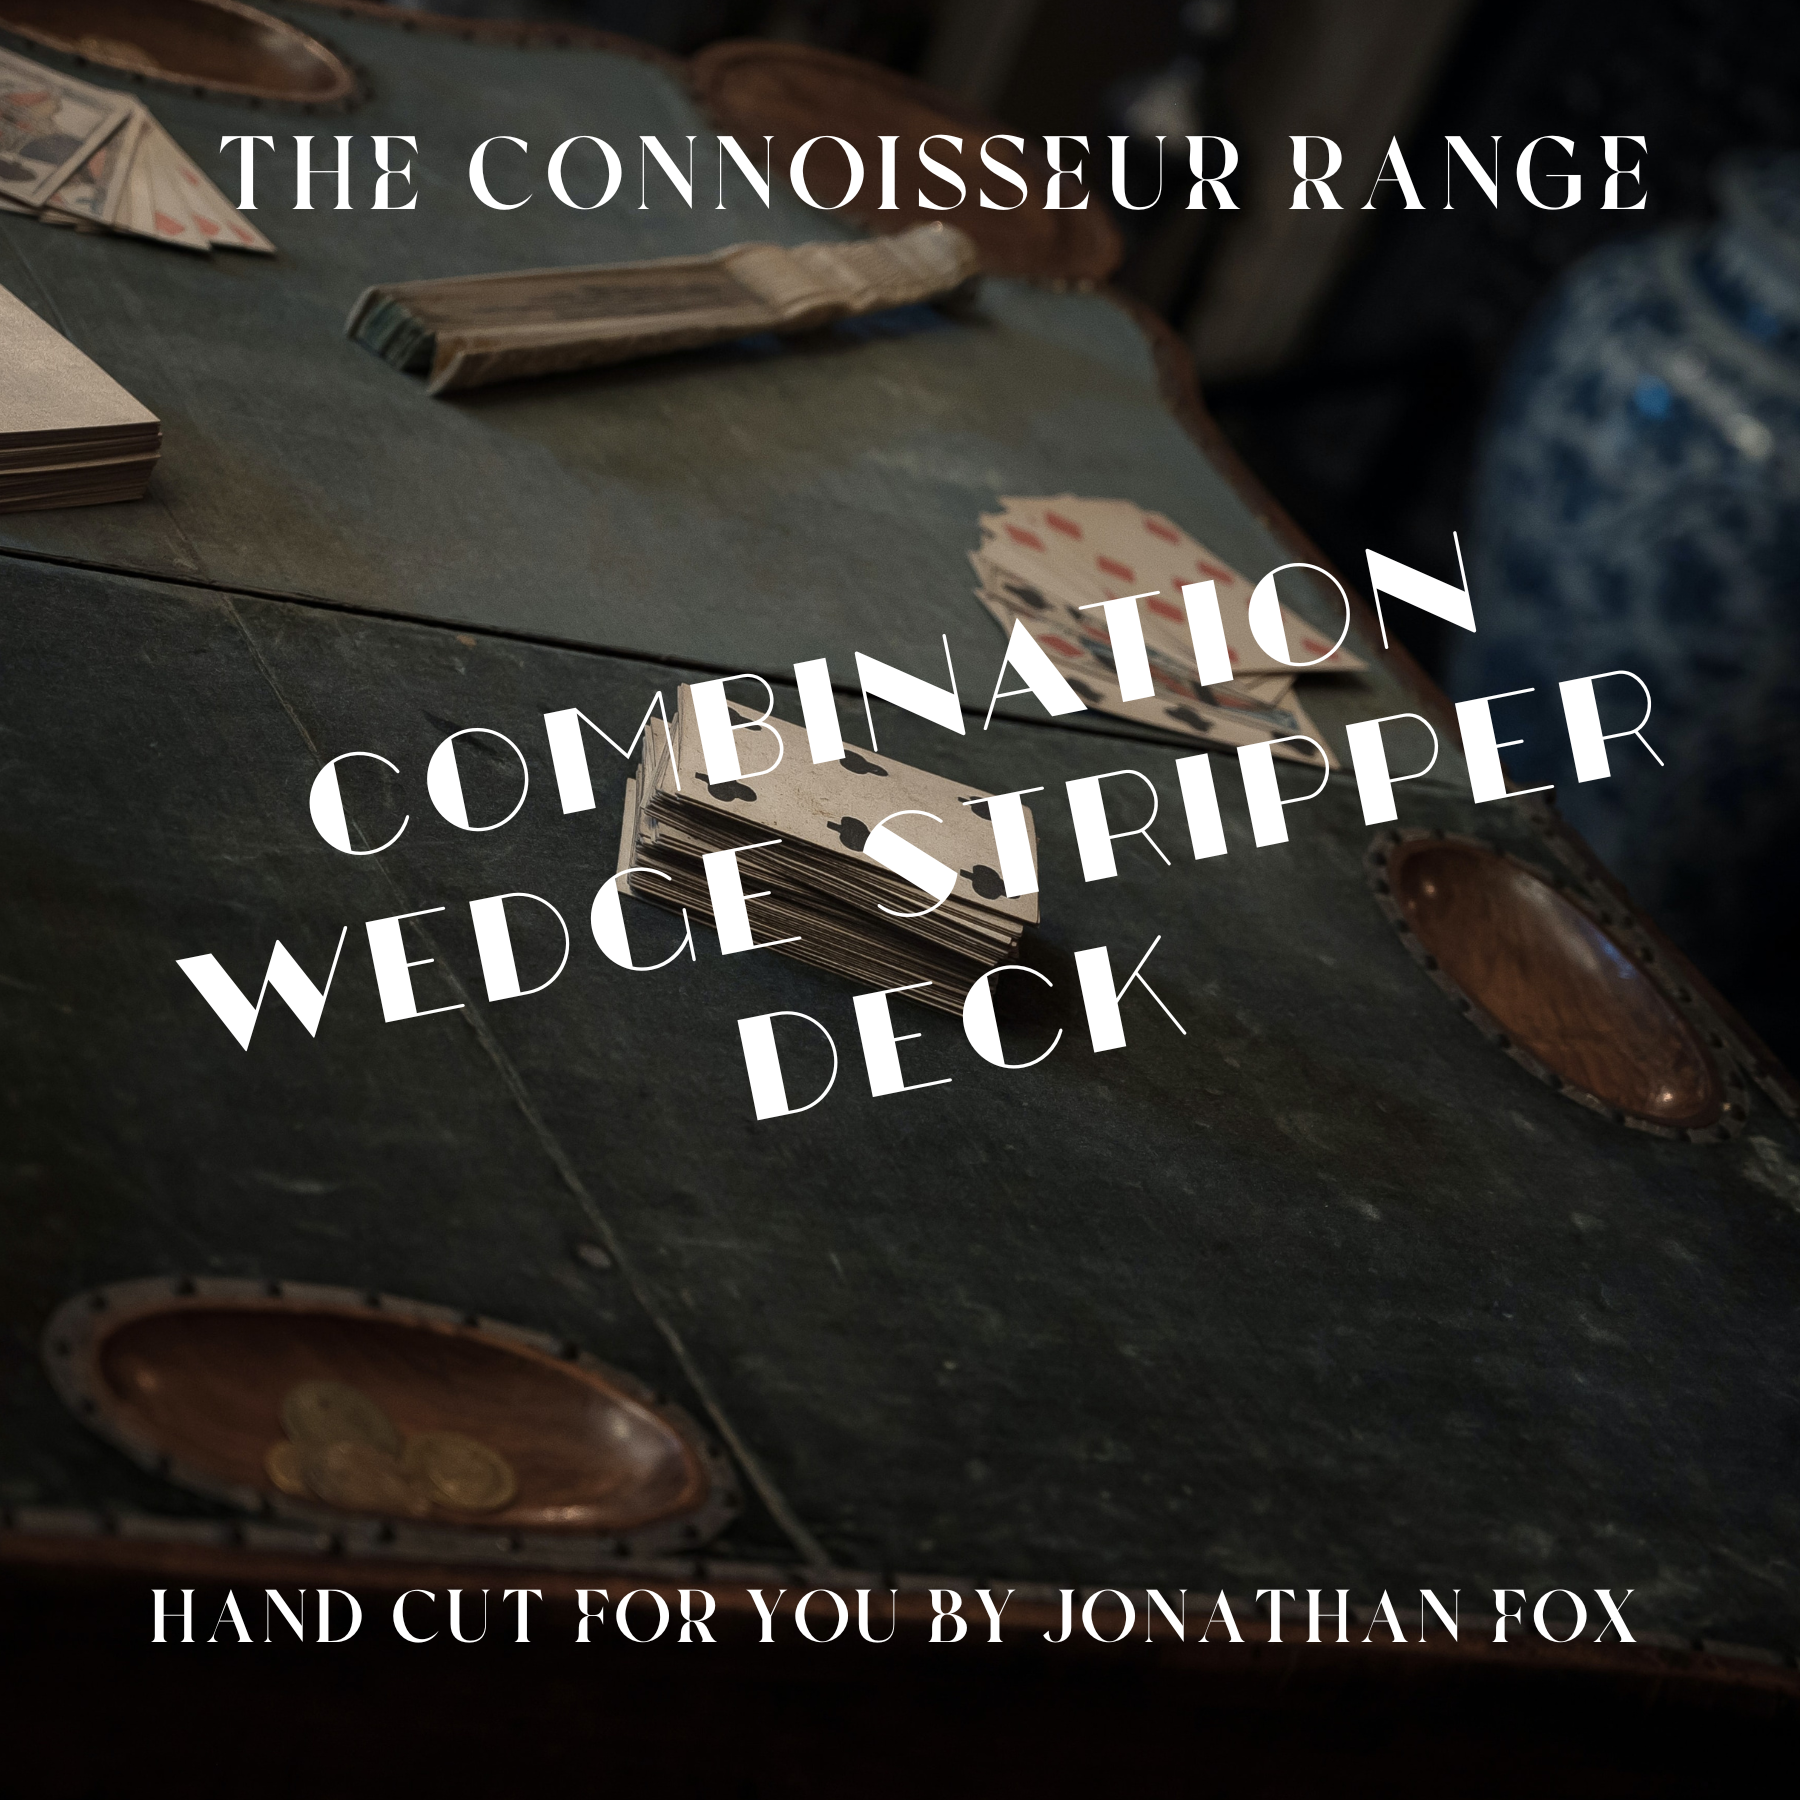 Combination Wedge Stripper Deck By Jonathan Fox